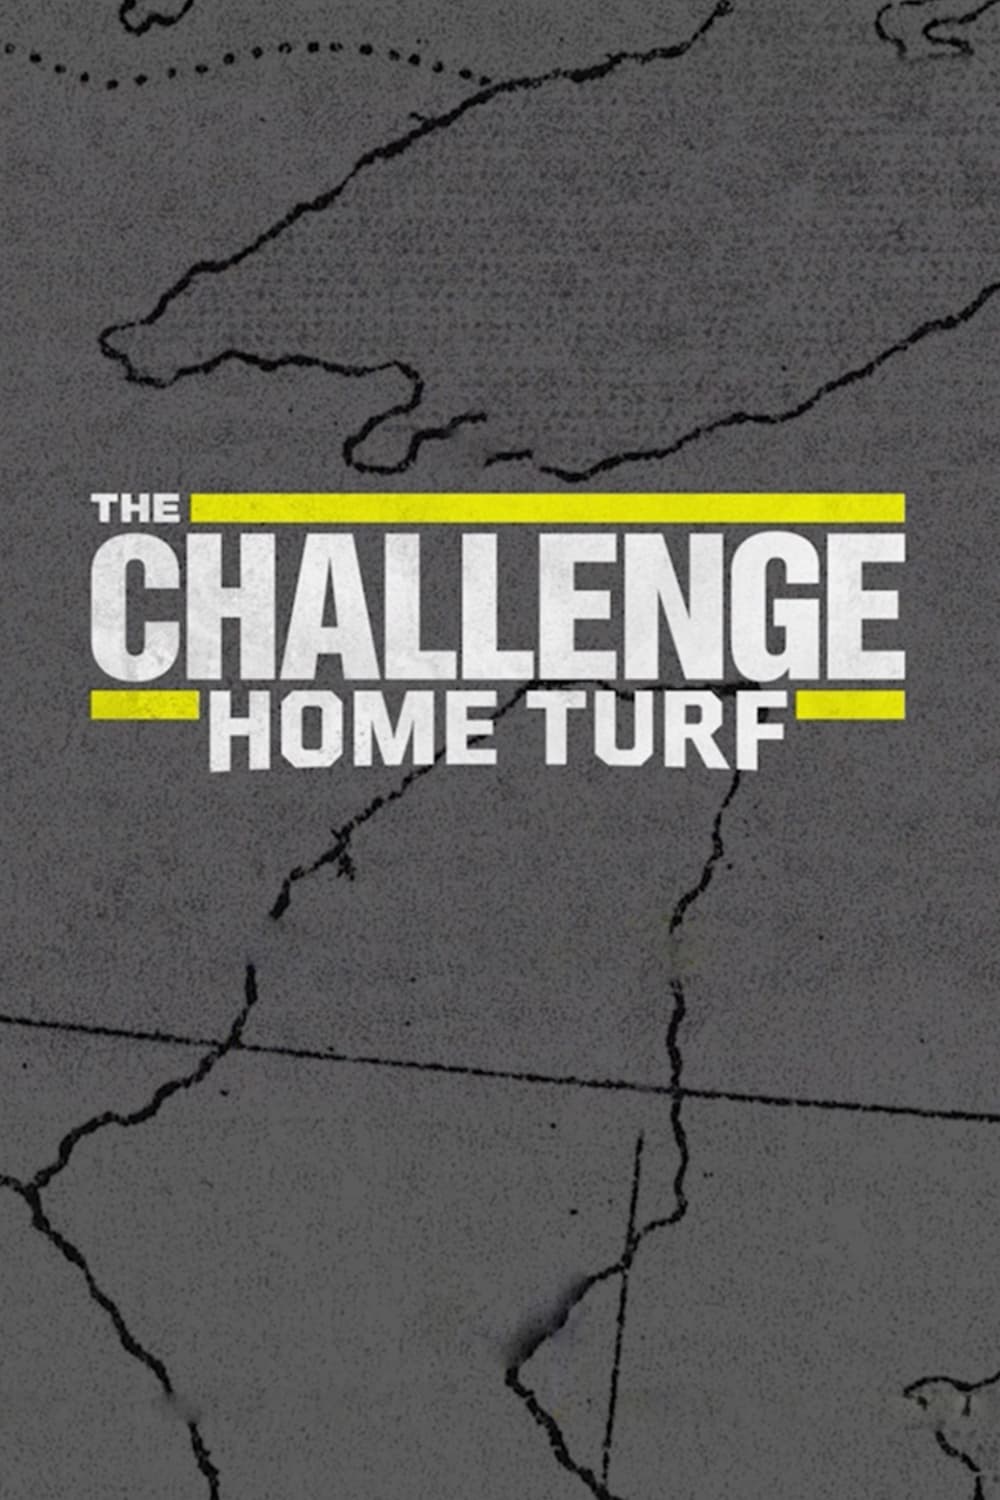 The Challenge: Home Turf